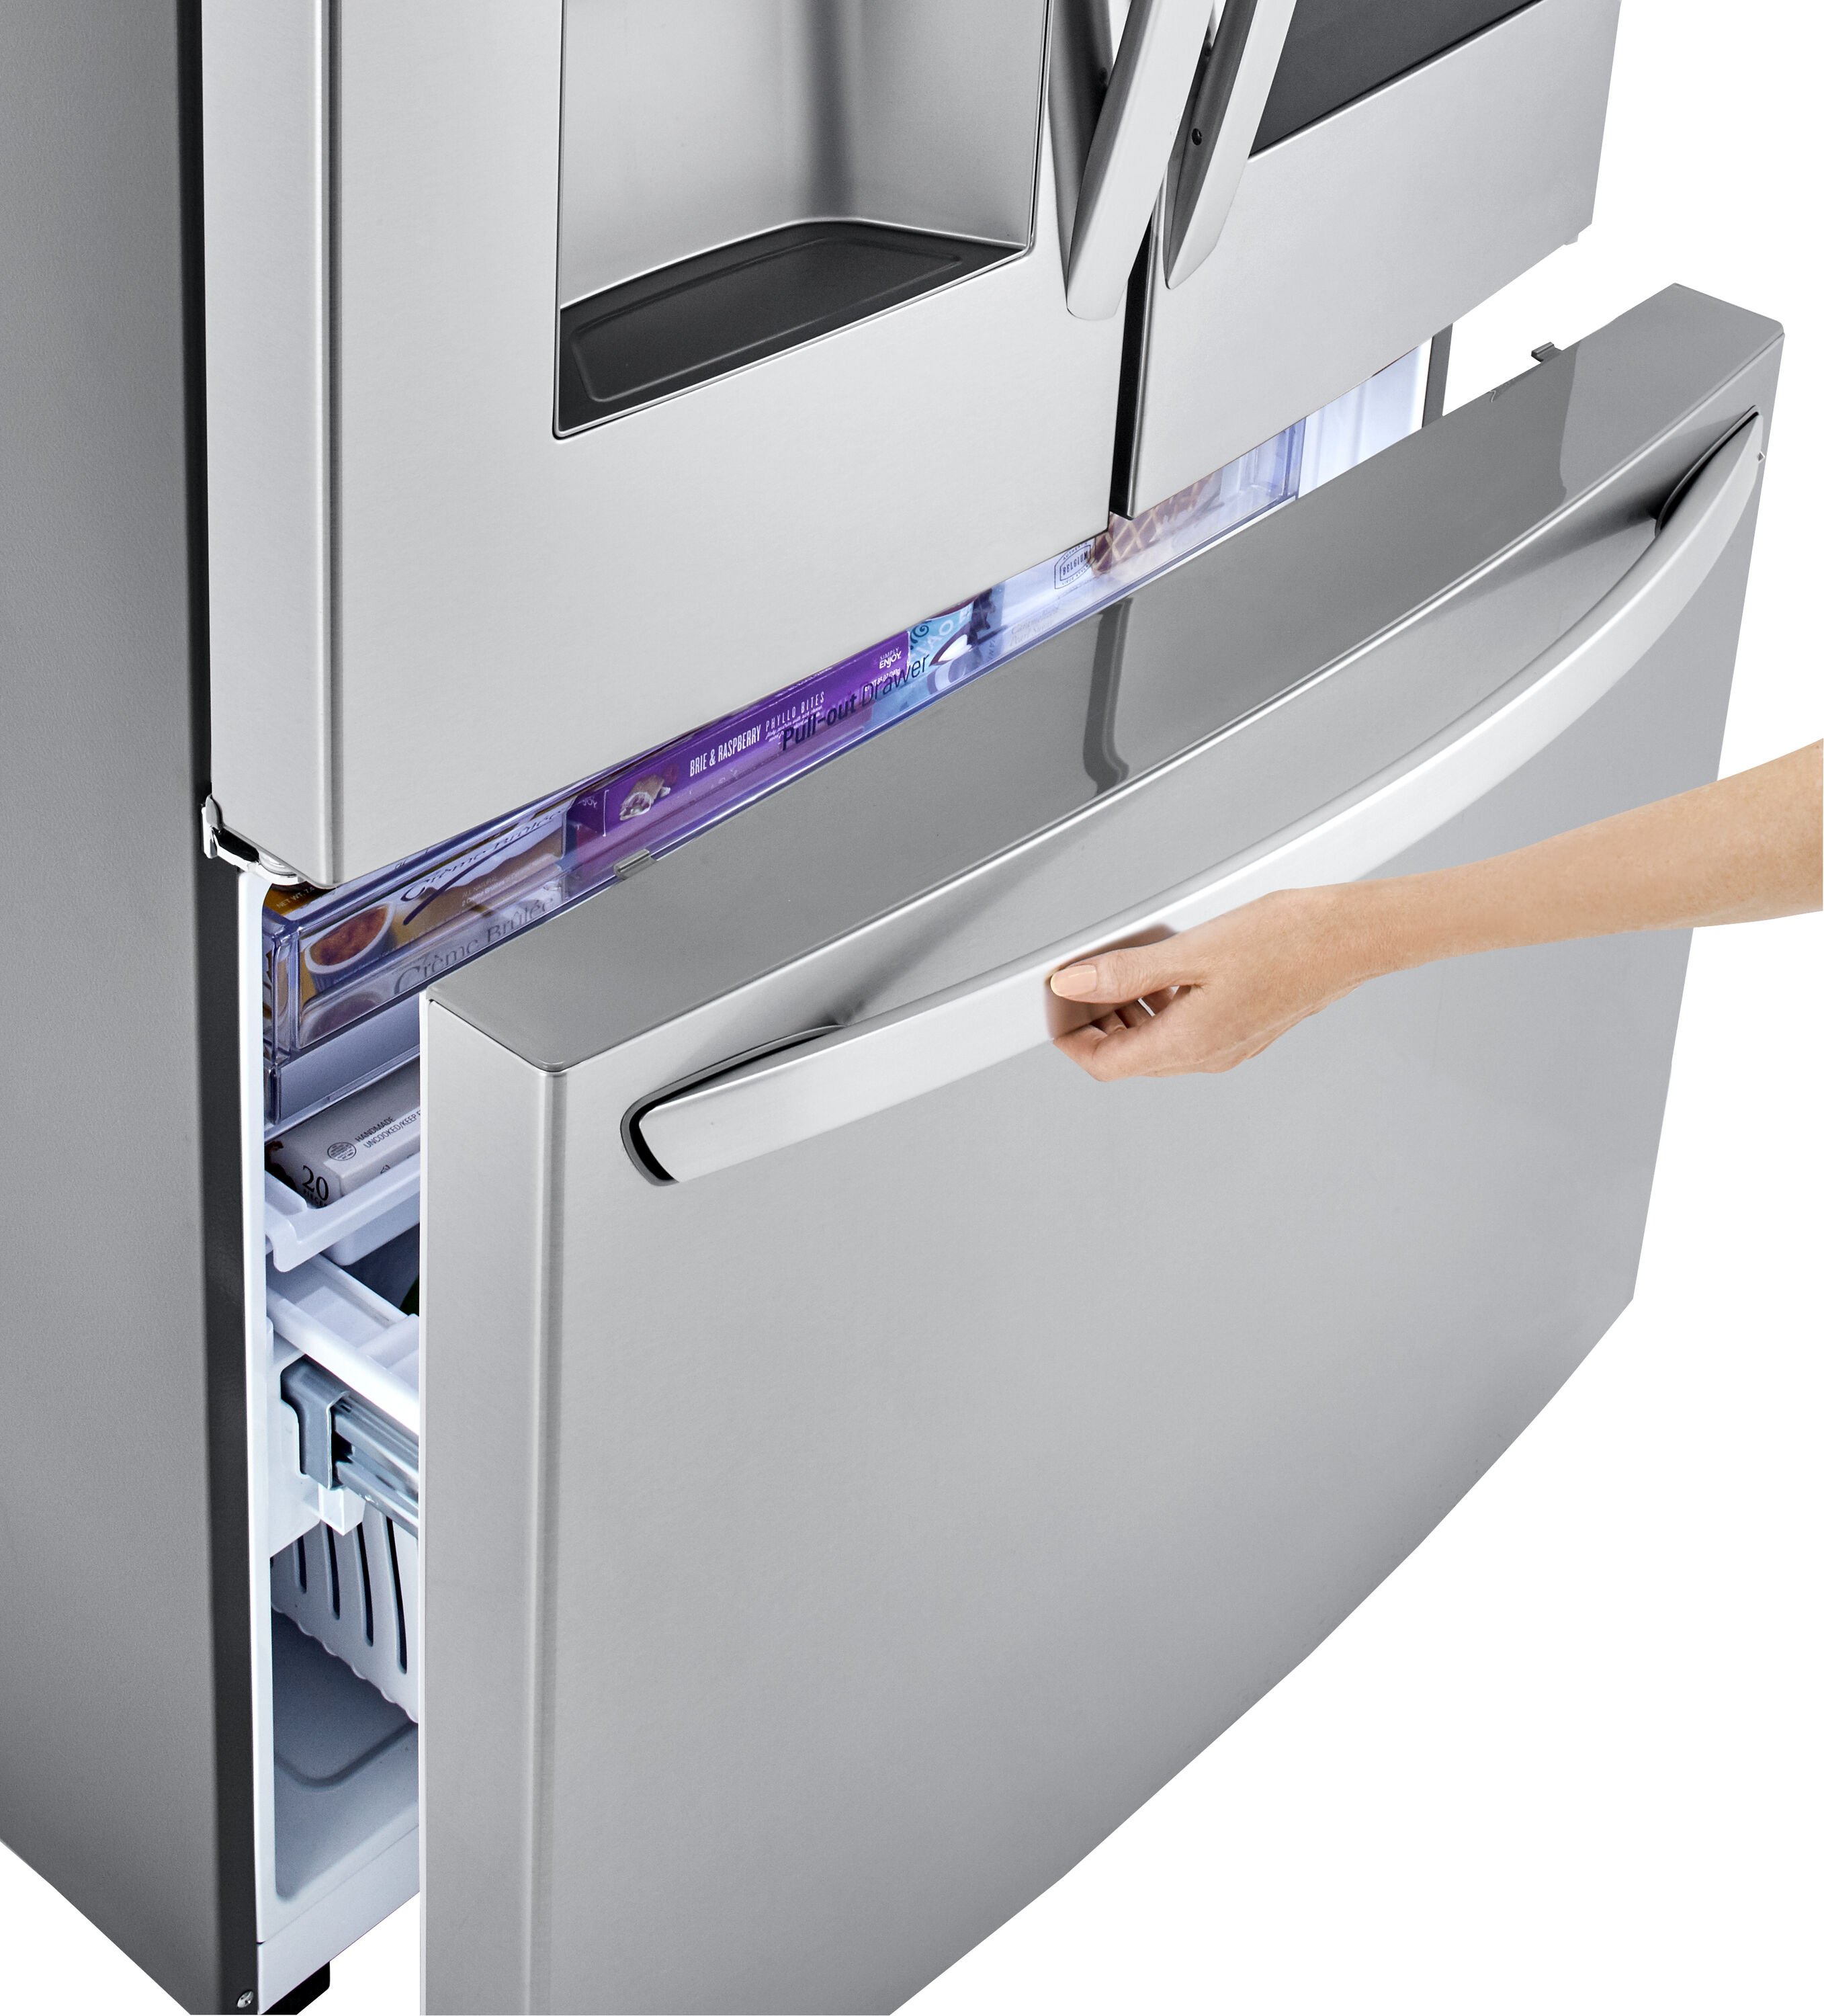 LG 30 cu. ft. French Door Craft Ice Smart Refrigerator - LRFVS3006D